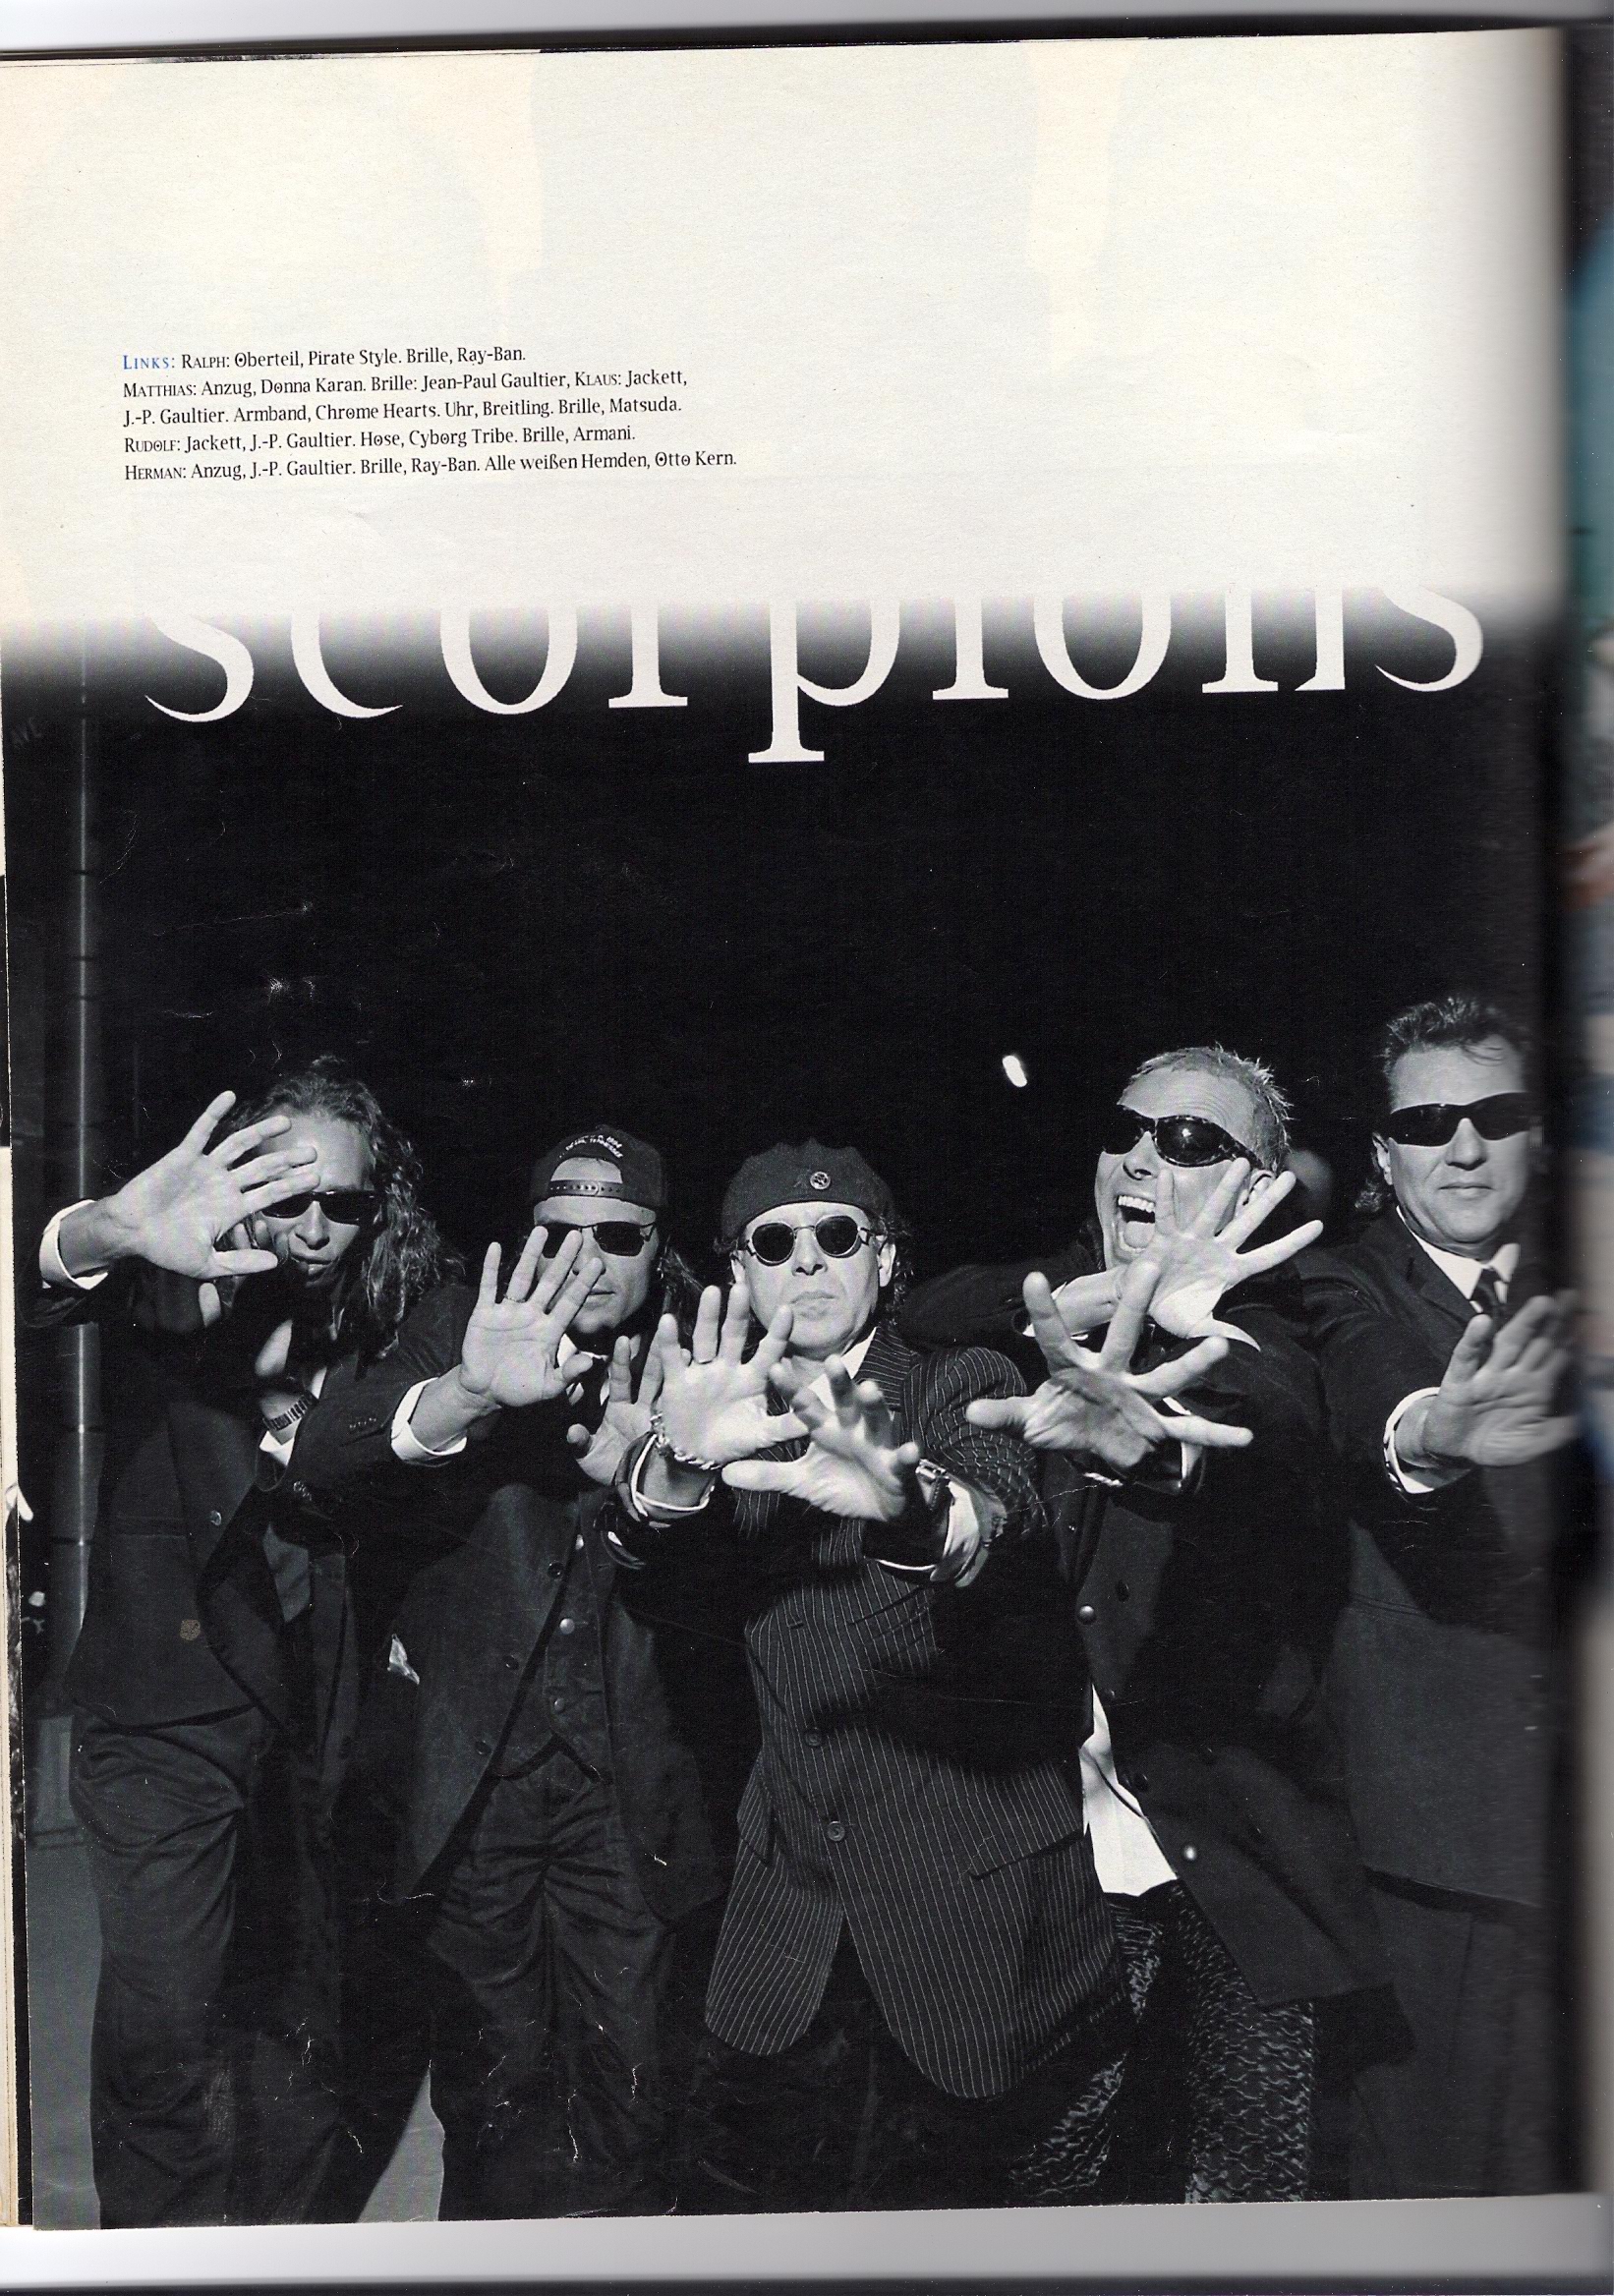 Ralph Rieckermann with Scorpions in PLAYBOY Magazine